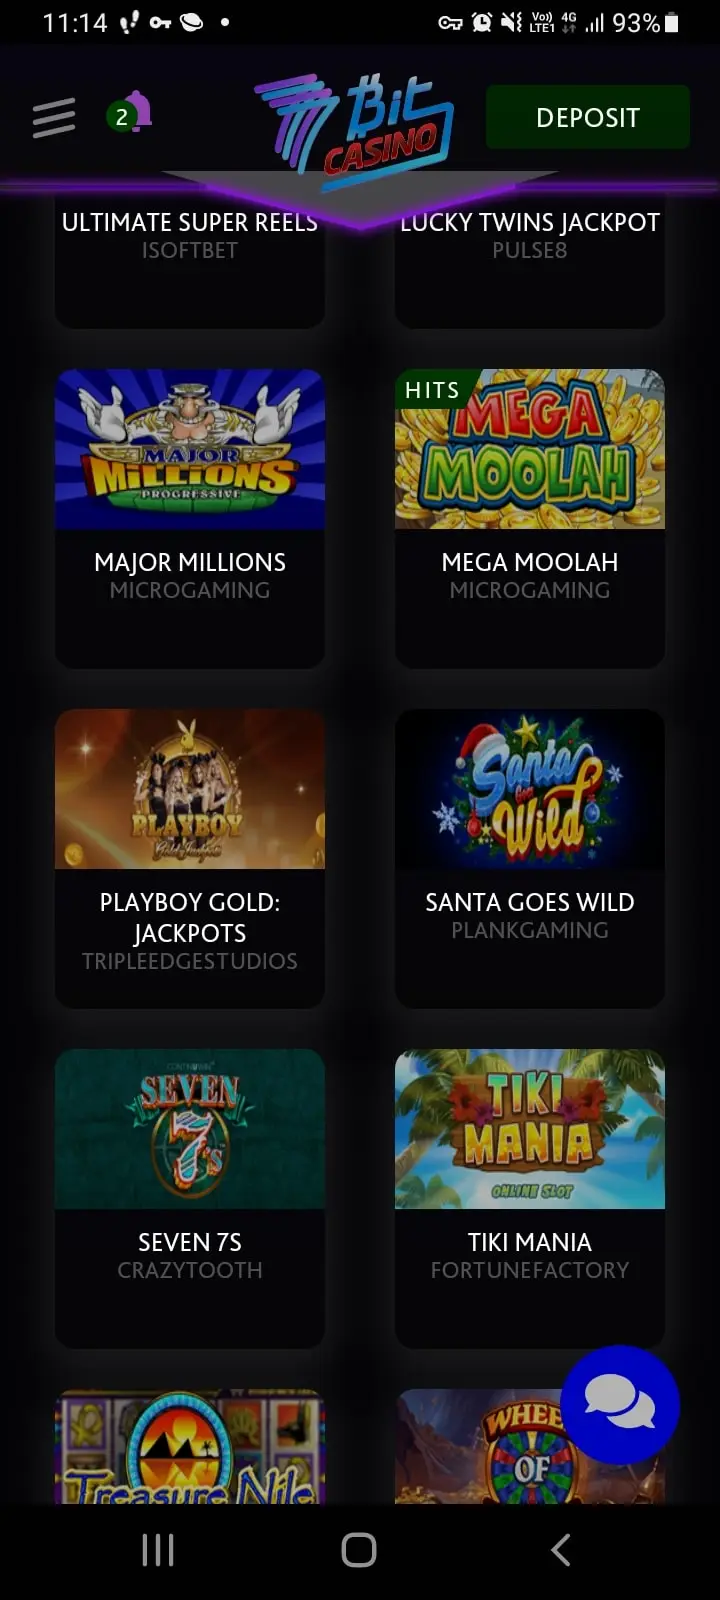 7bit casino app screenshot 3